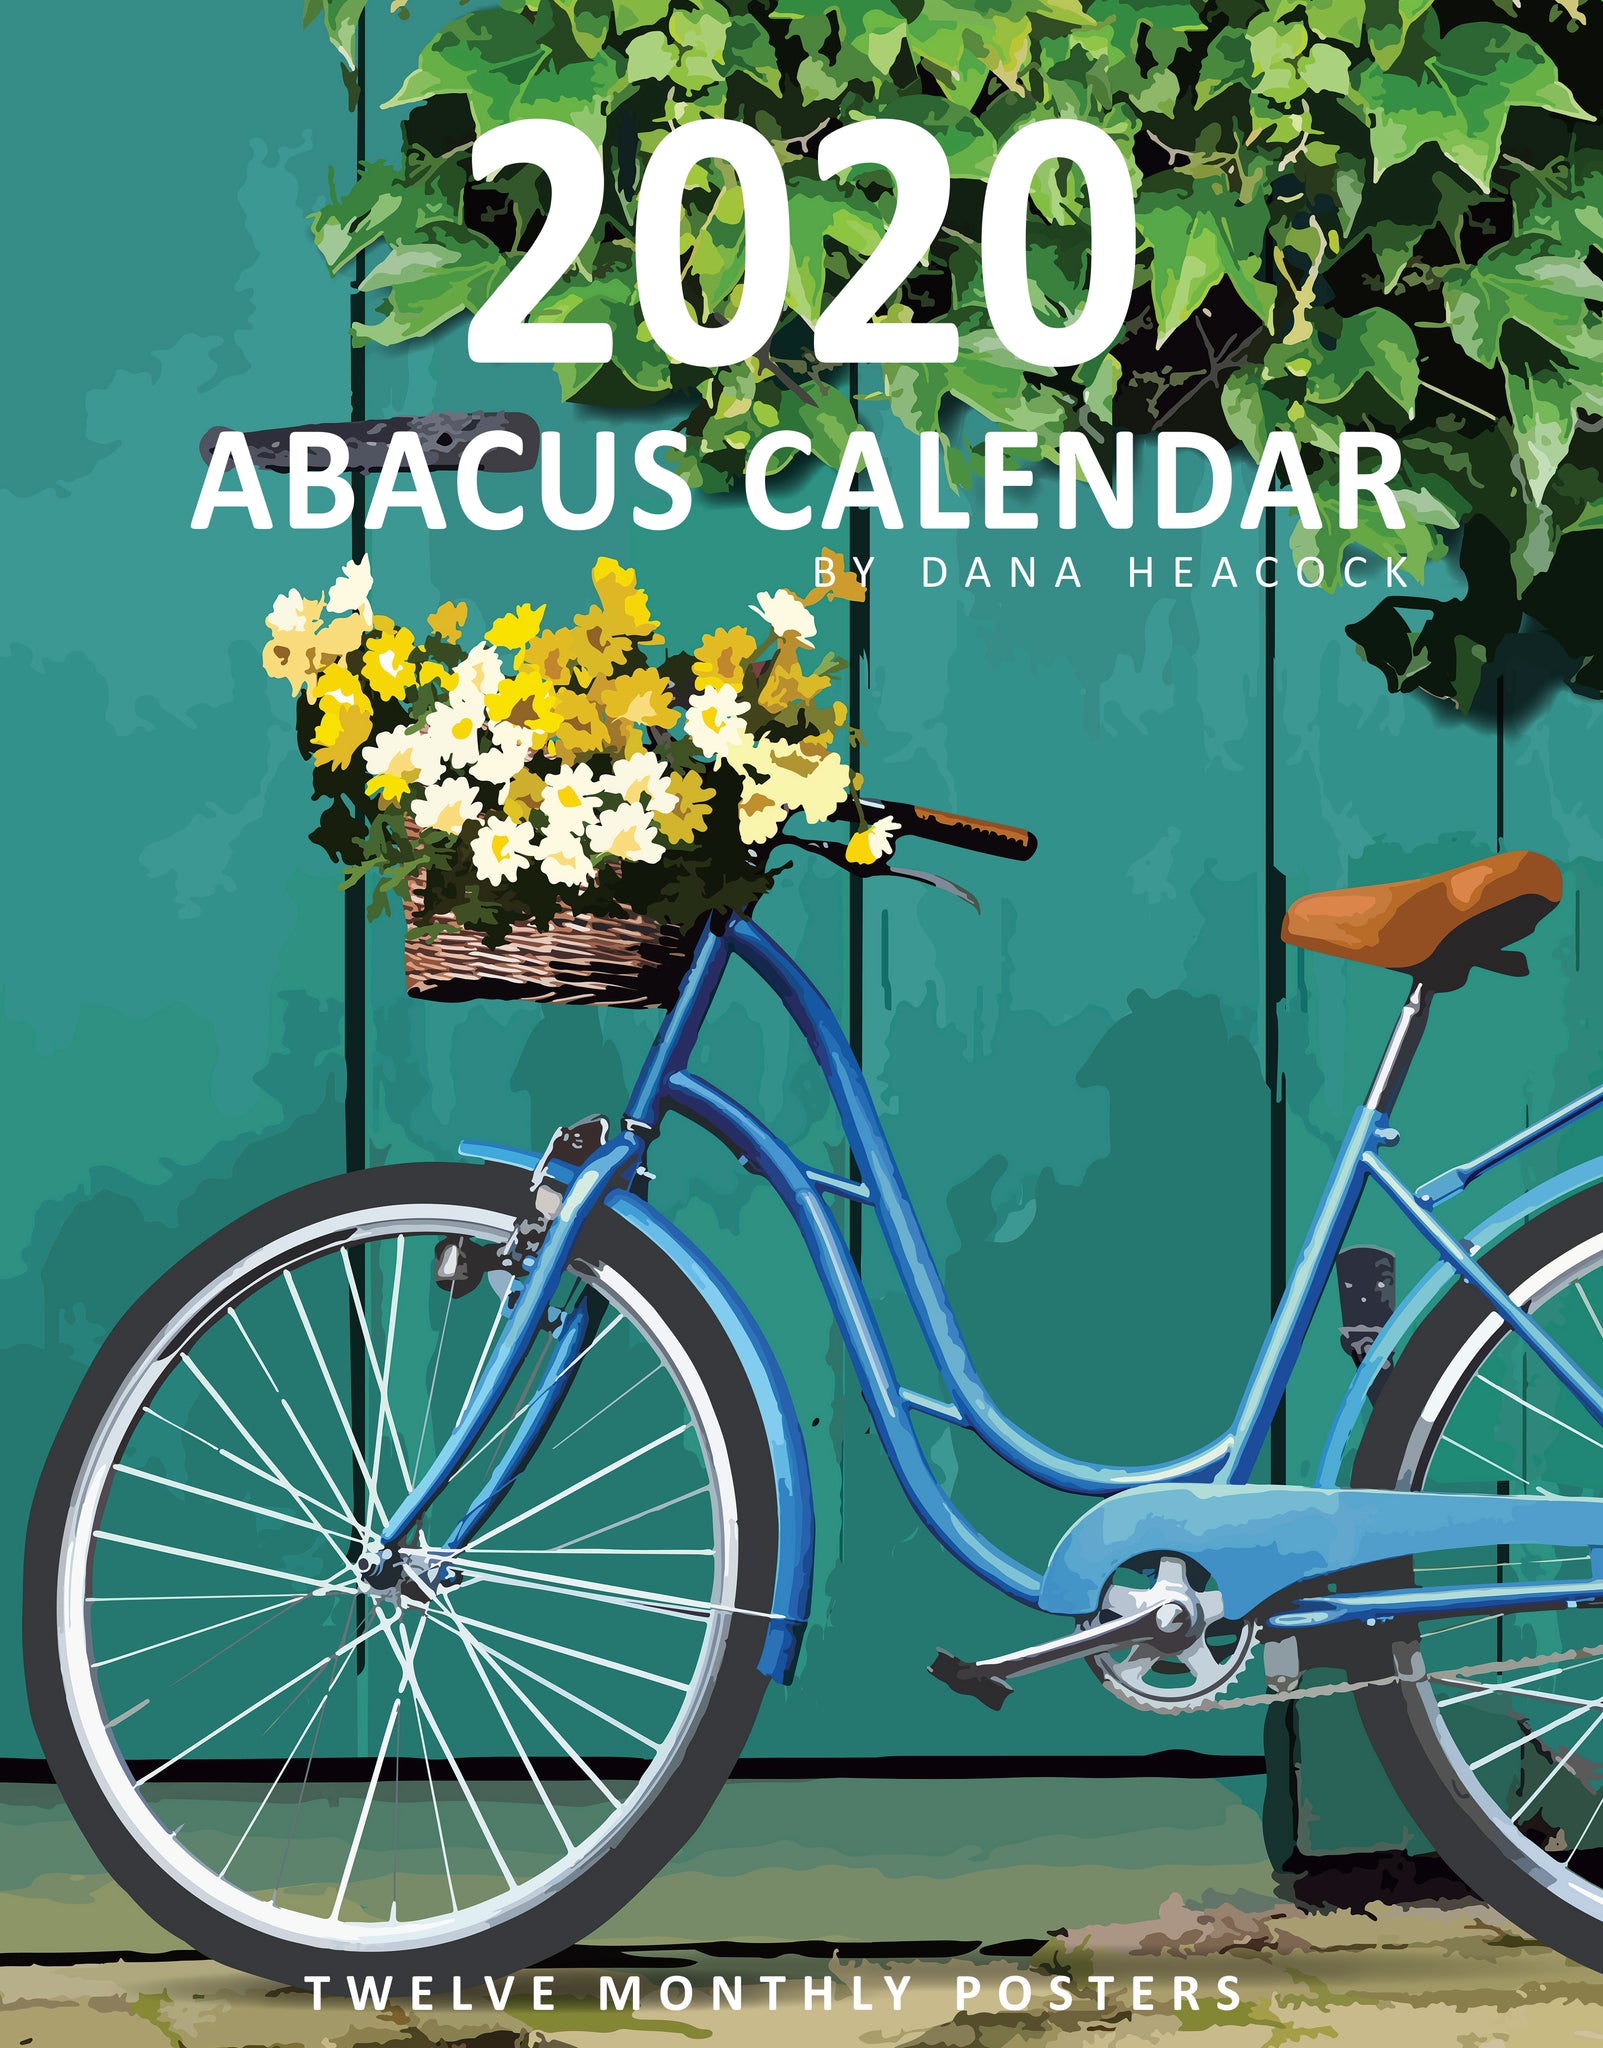 abacus calendars in maine